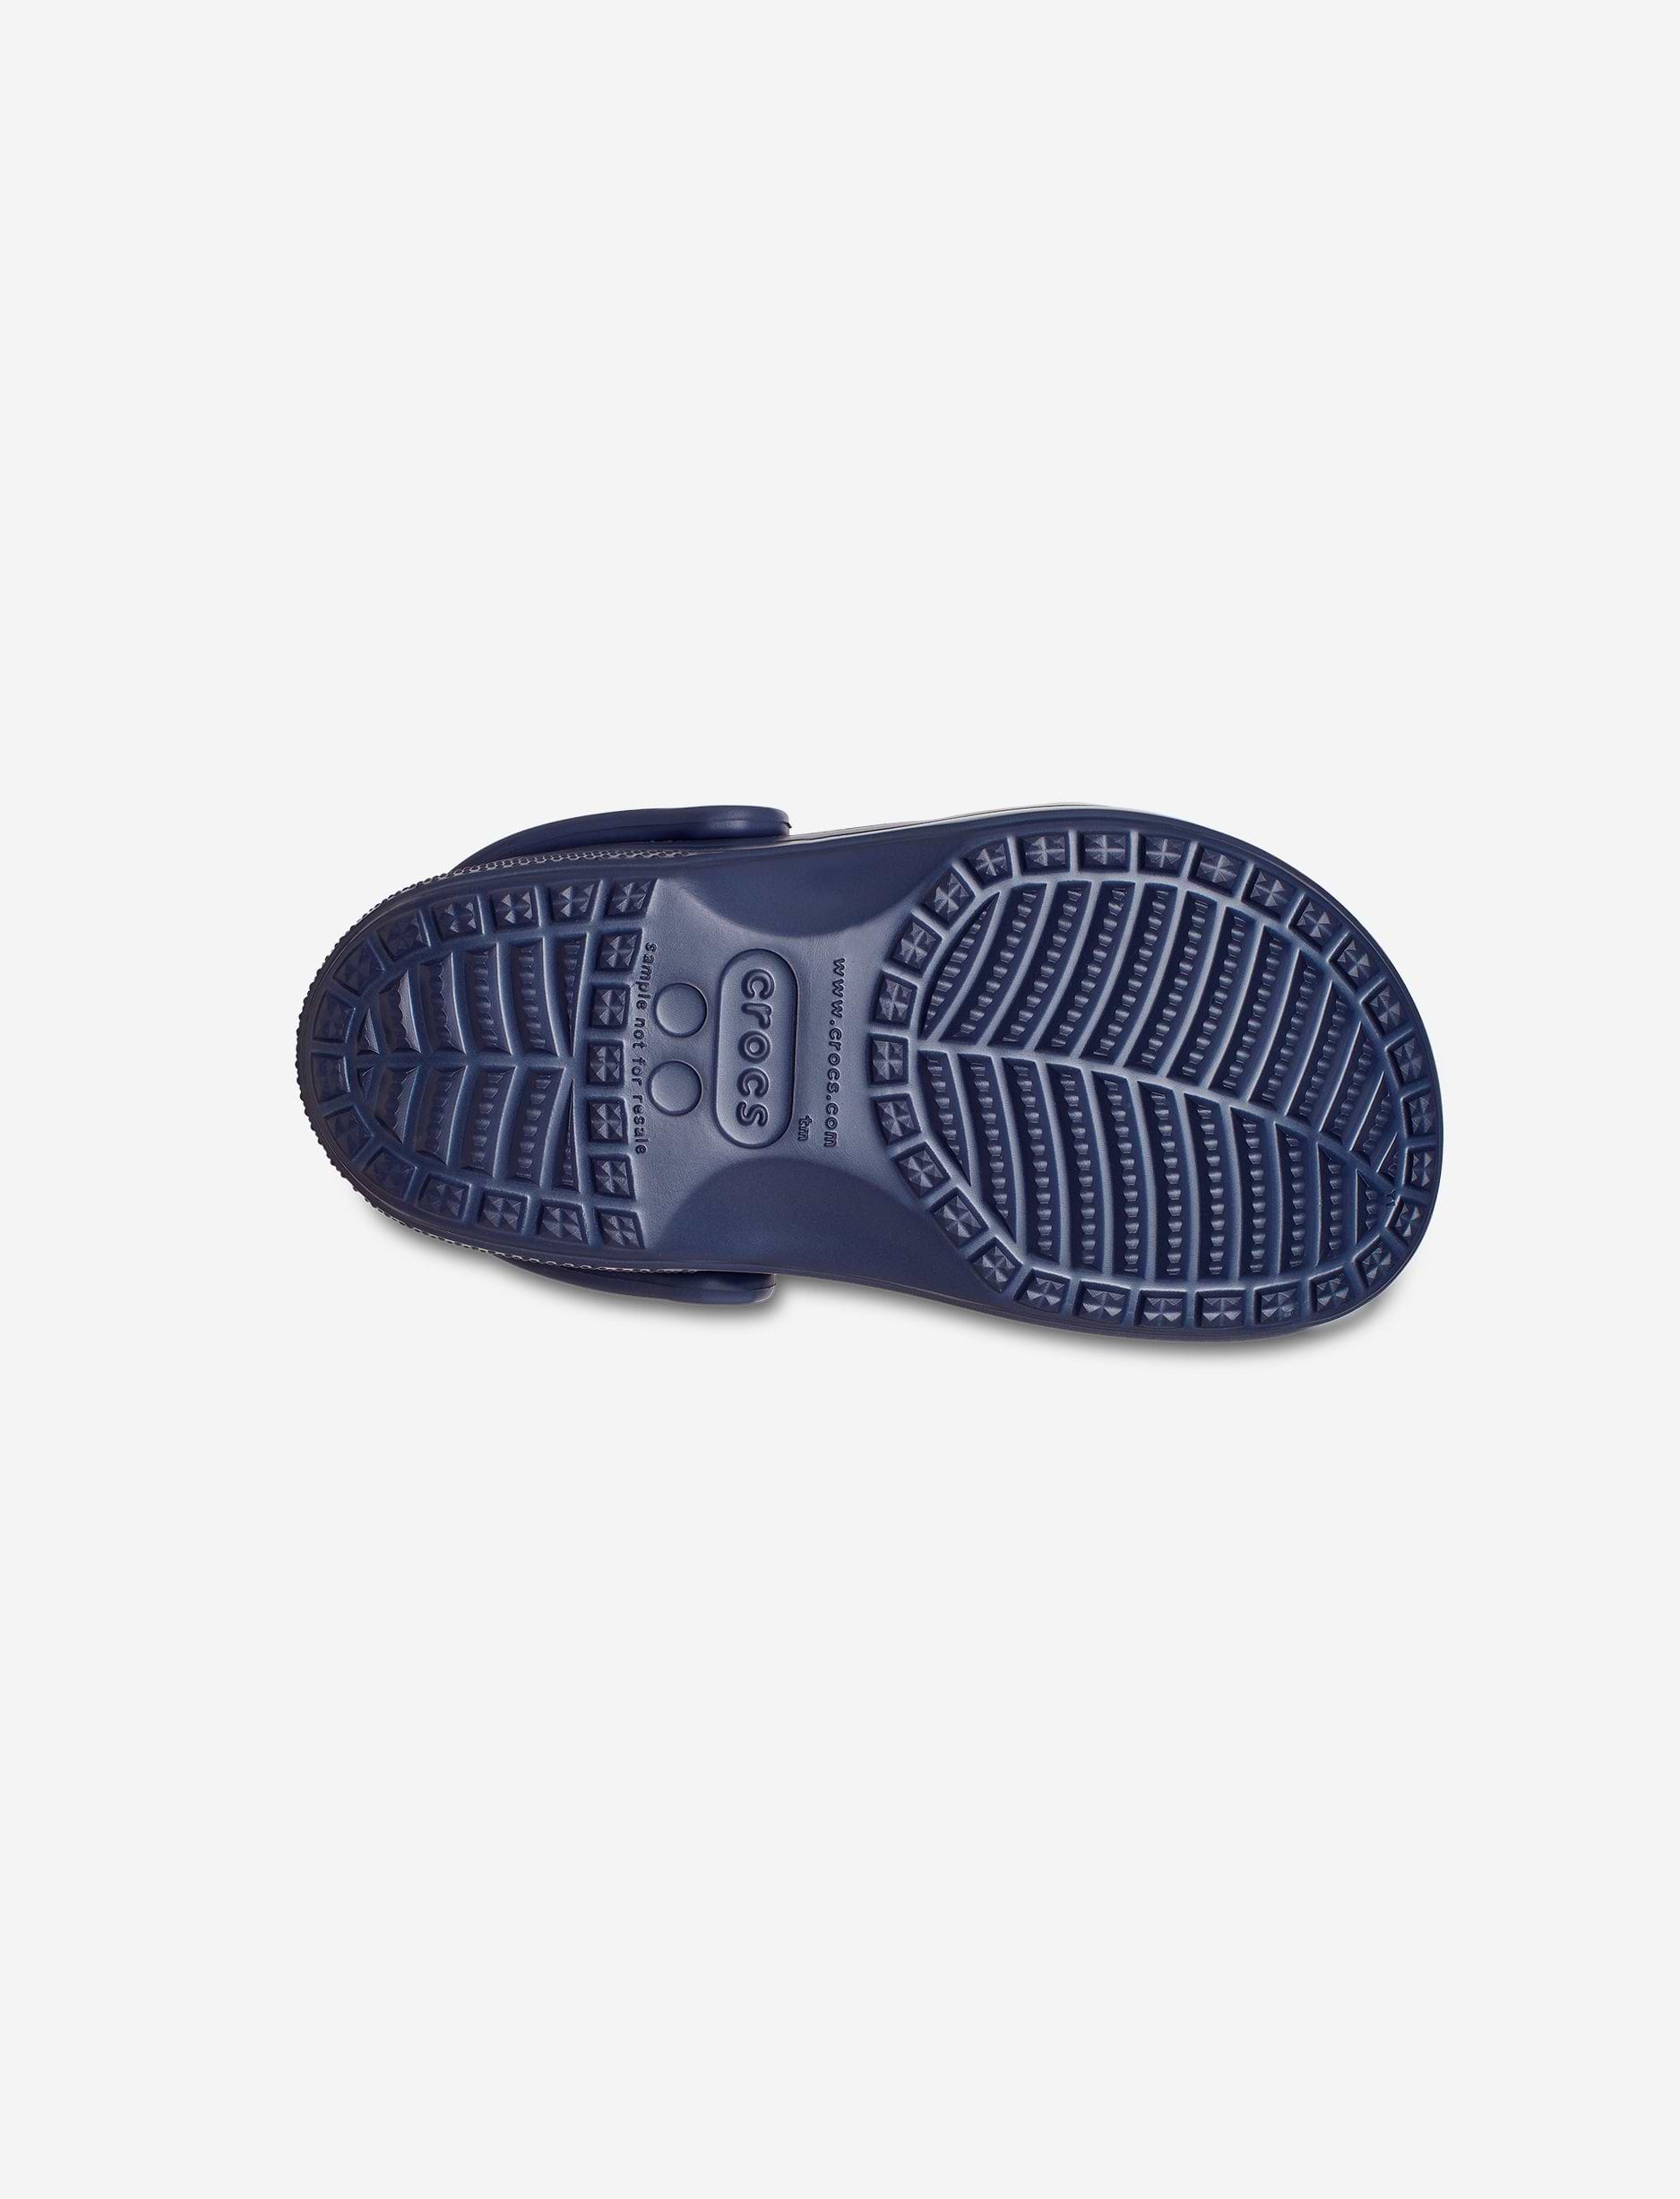 Classic Crocs Sandal T - סנדלי קרוקס קלאסיים לילדים